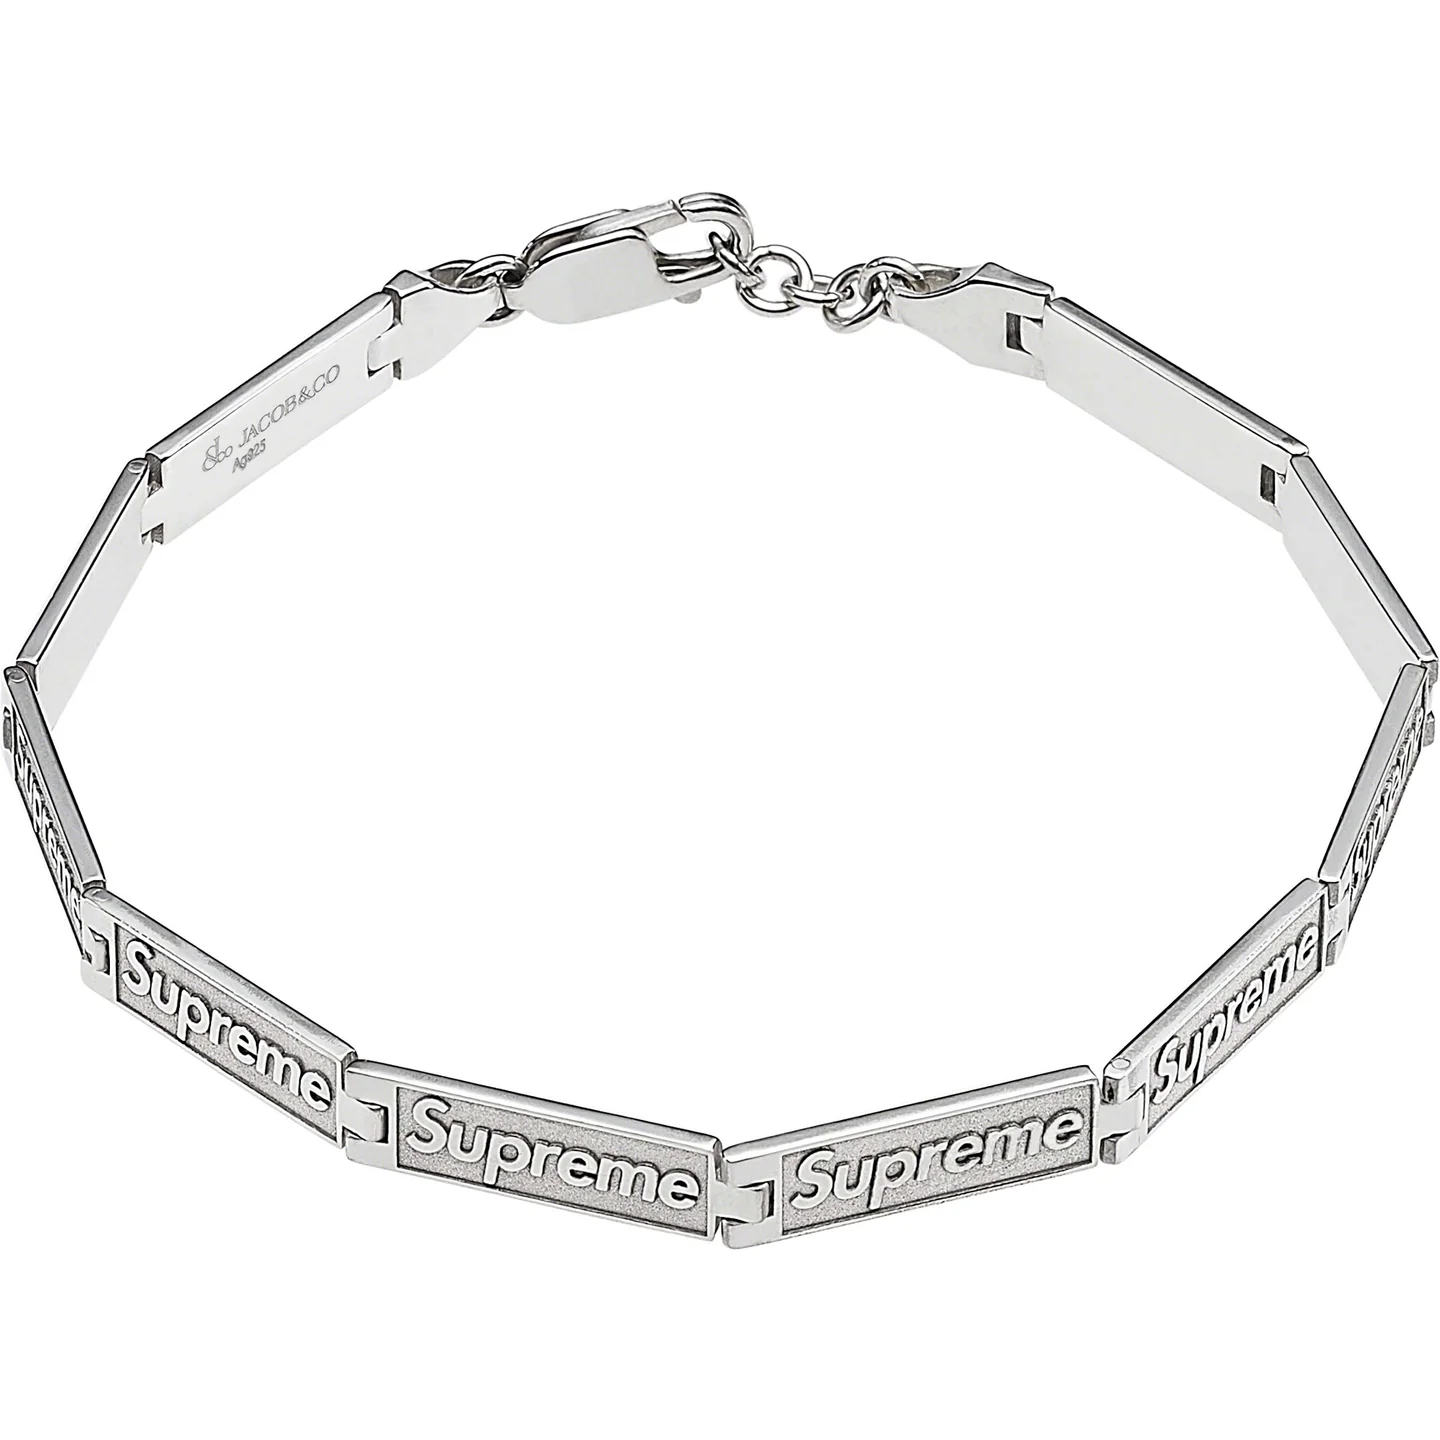 Supreme Supreme®/Jacob & Co Logo Link Bracelet